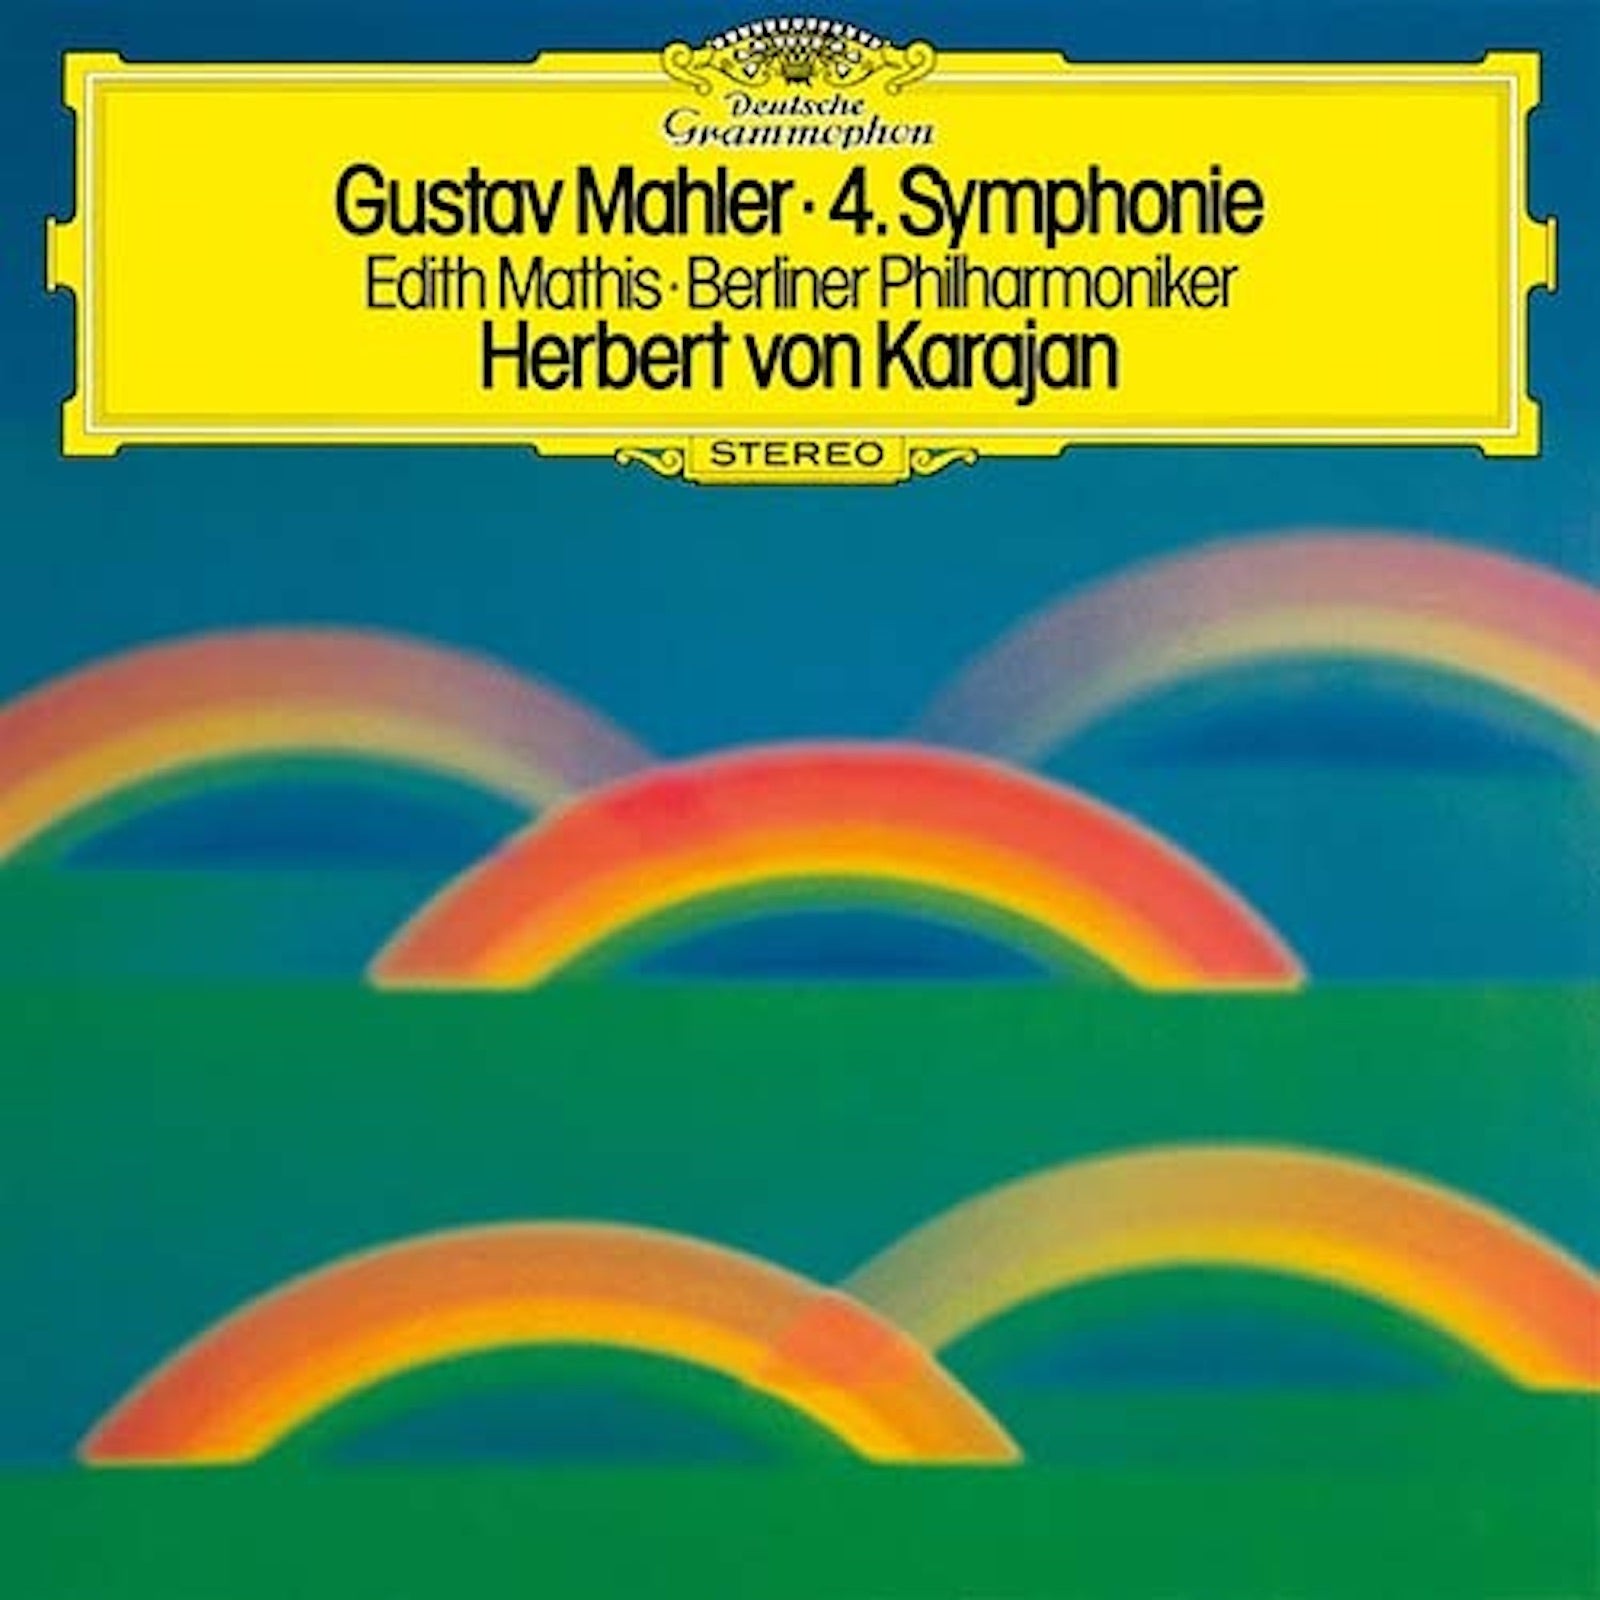 Gustav Mahler - Edith Mathis, Berliner Philharmoniker, Herbert von Karajan ‎– 4. Symphonie